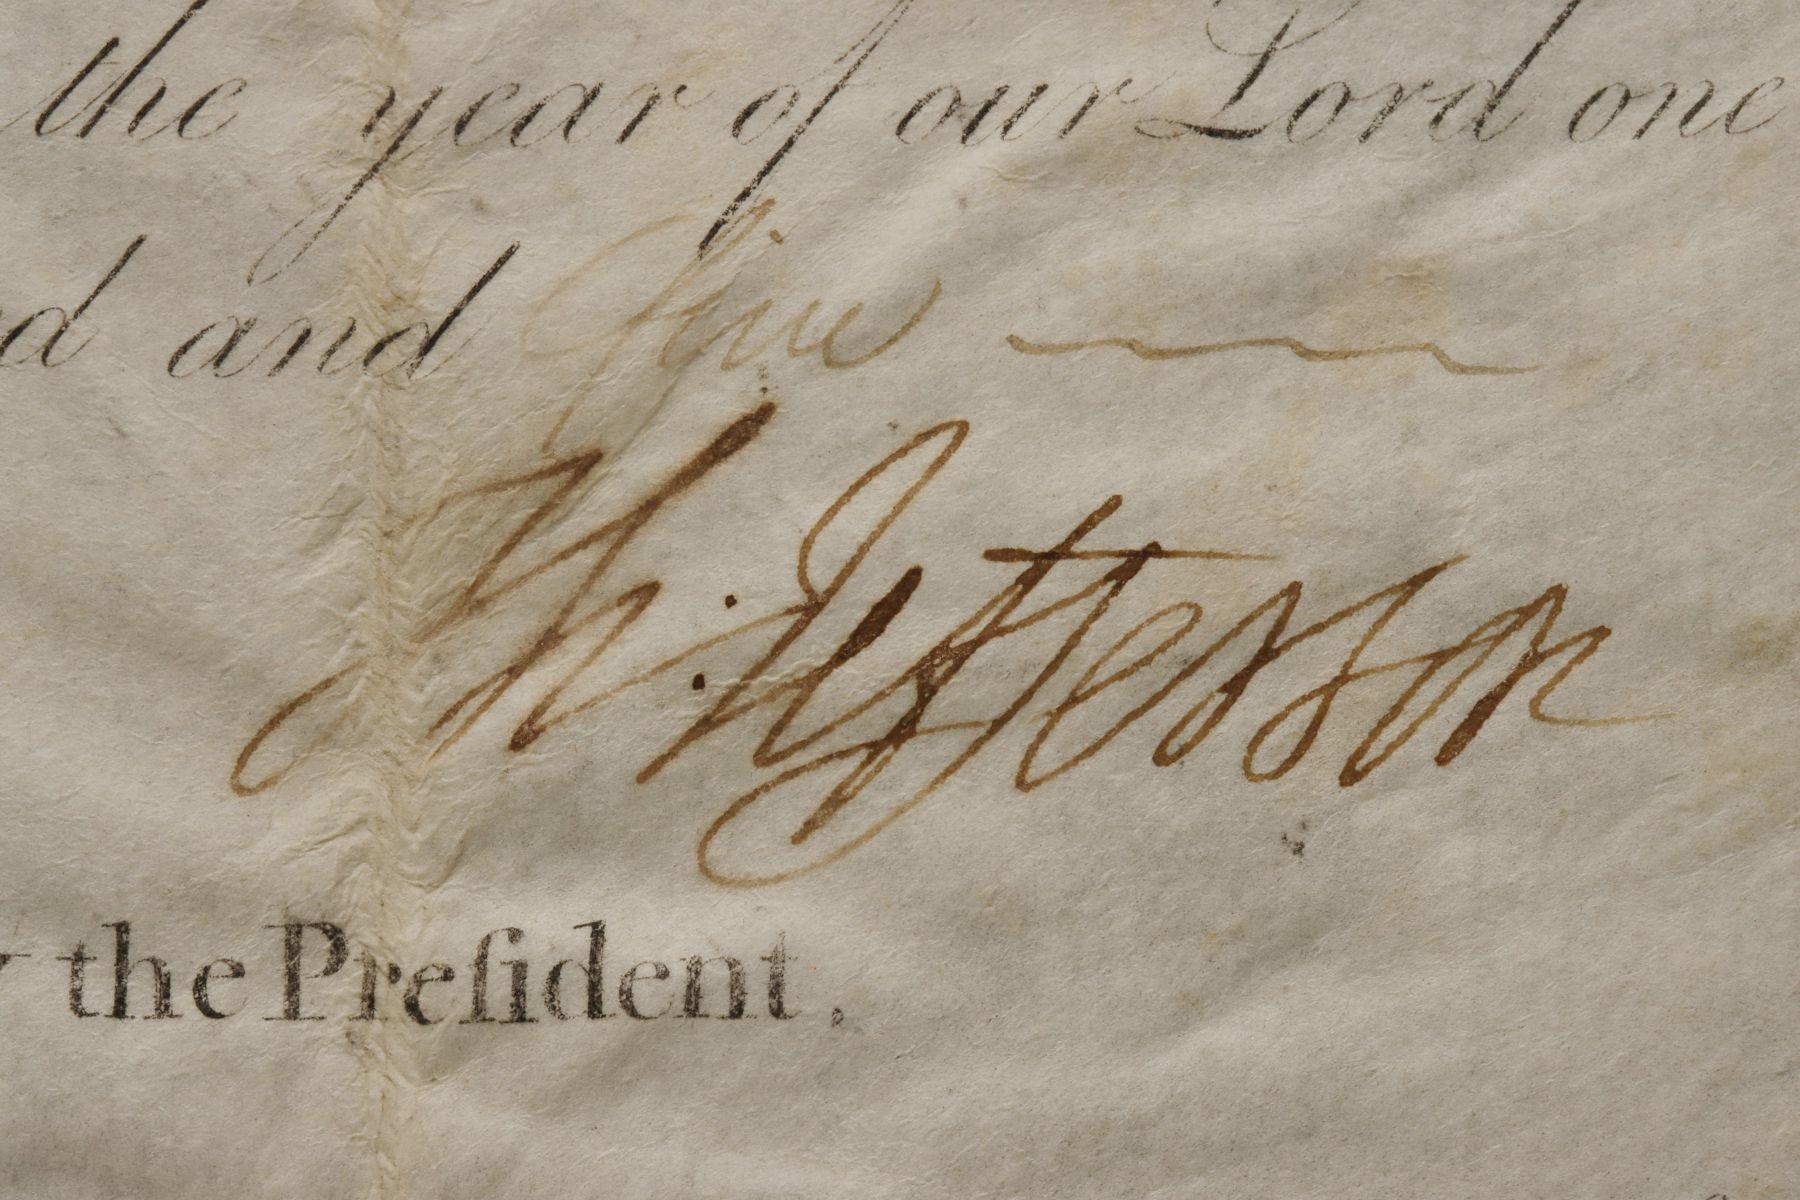 AN 1805 SHIP PASSPORT SIGNED BY JEFFERSON & MADISON